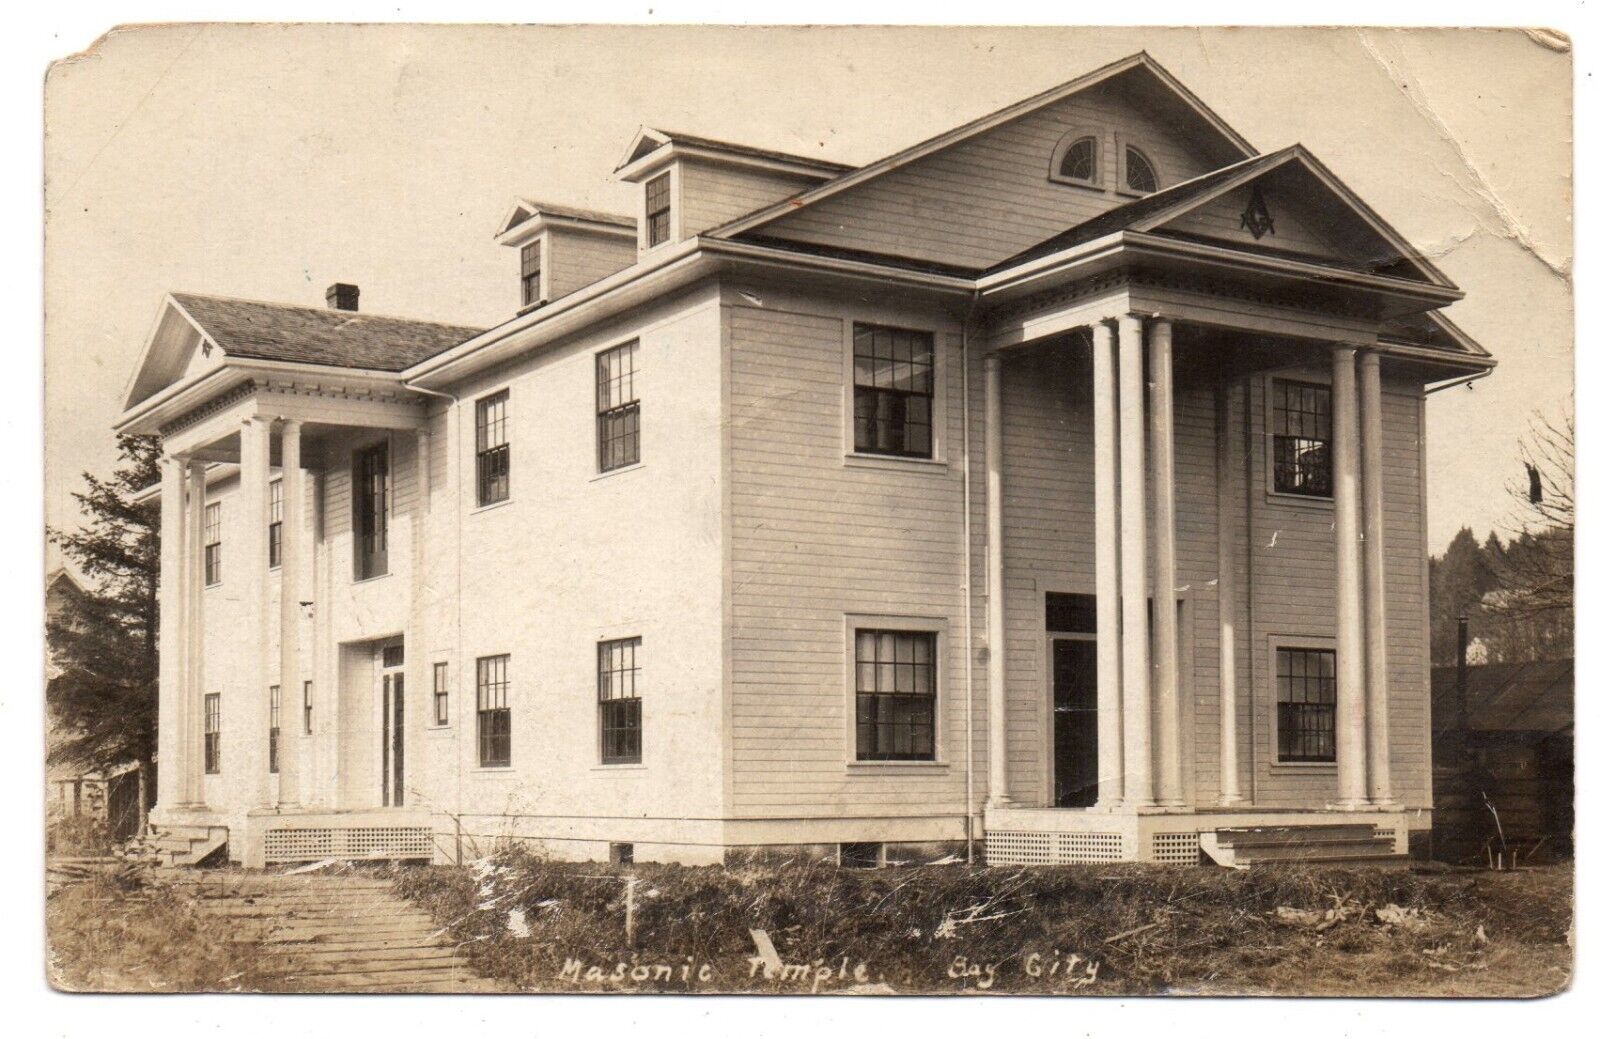 Antique RPPC postcard MASONIC TEMPLE BUILDING Masons hall BAY CITY, OREGON 1920s